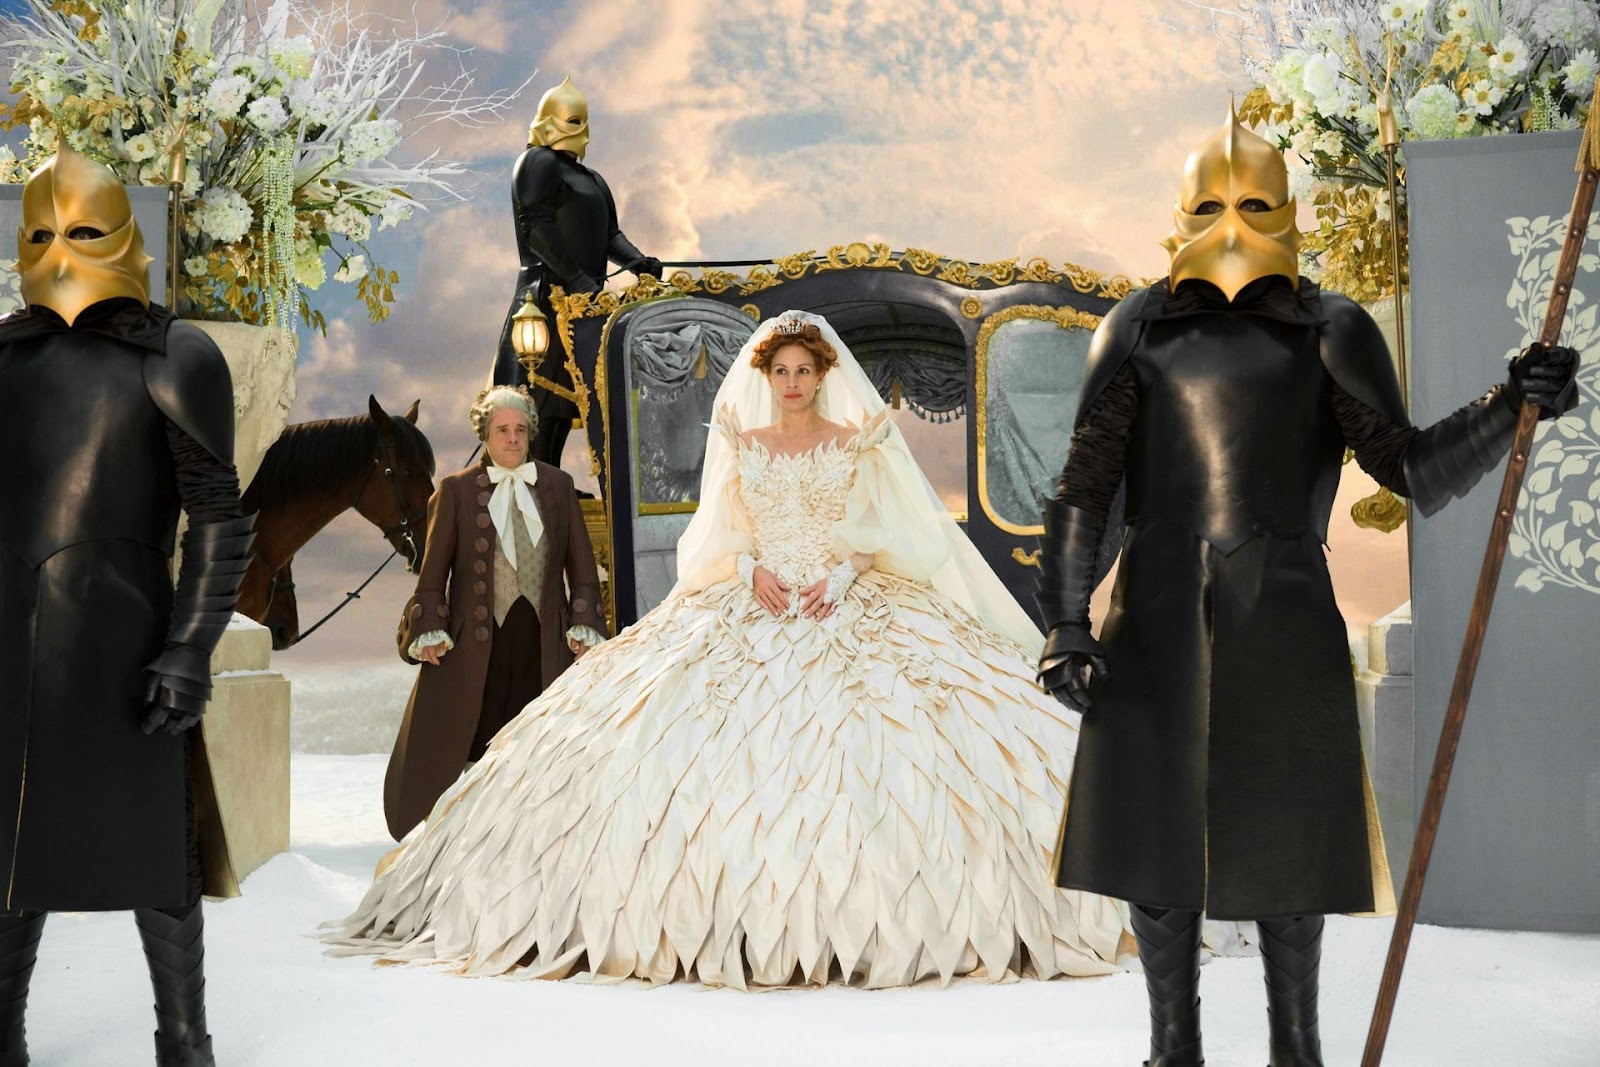 http://3.bp.blogspot.com/-94umpN-_ZDM/T5_e5lYuBDI/AAAAAAAAD0Q/kFs3TLQxrrw/s1600/mirror-mirror-image+08+wedding+dress+evil+queen++julia+roberts.jpg